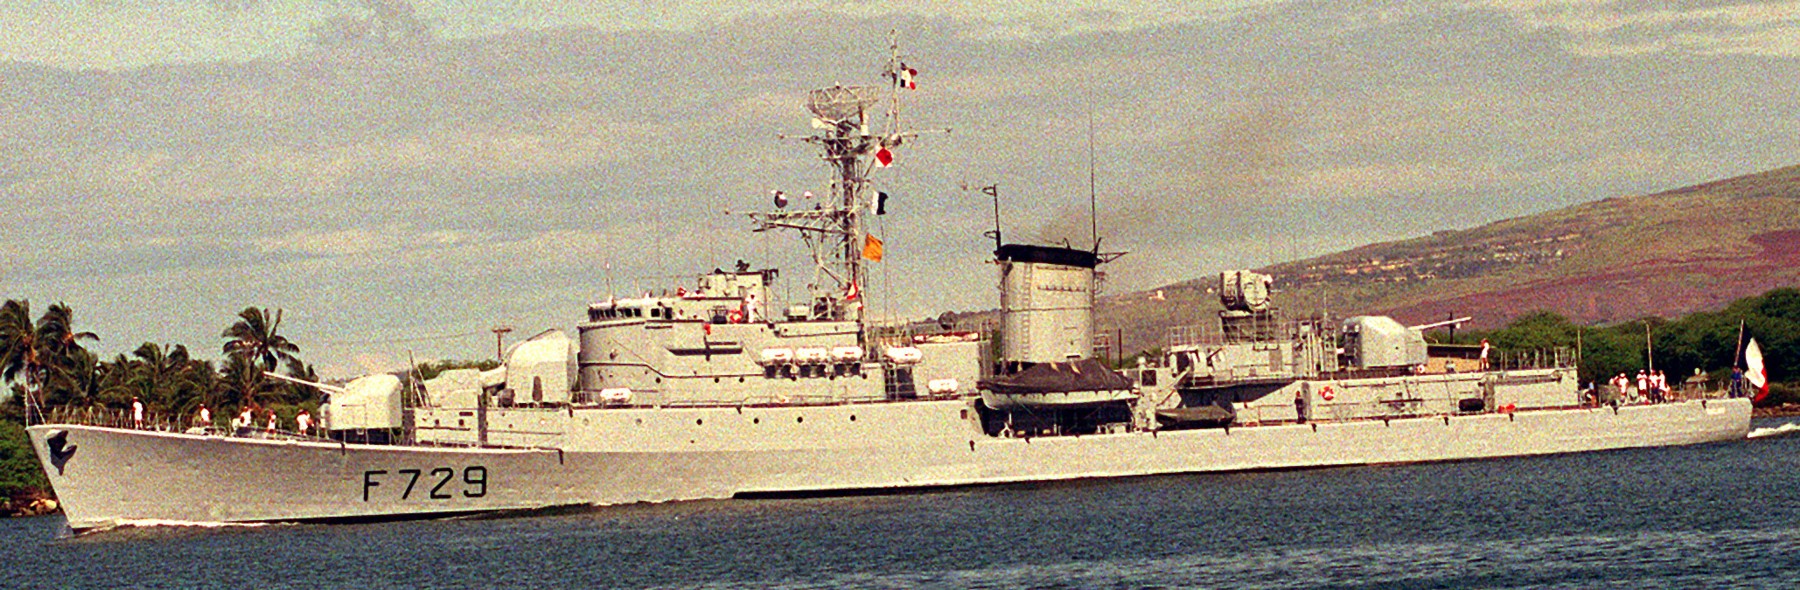 riviere class frigate aviso escorteur f-729 balny french navy marine nationale 0504